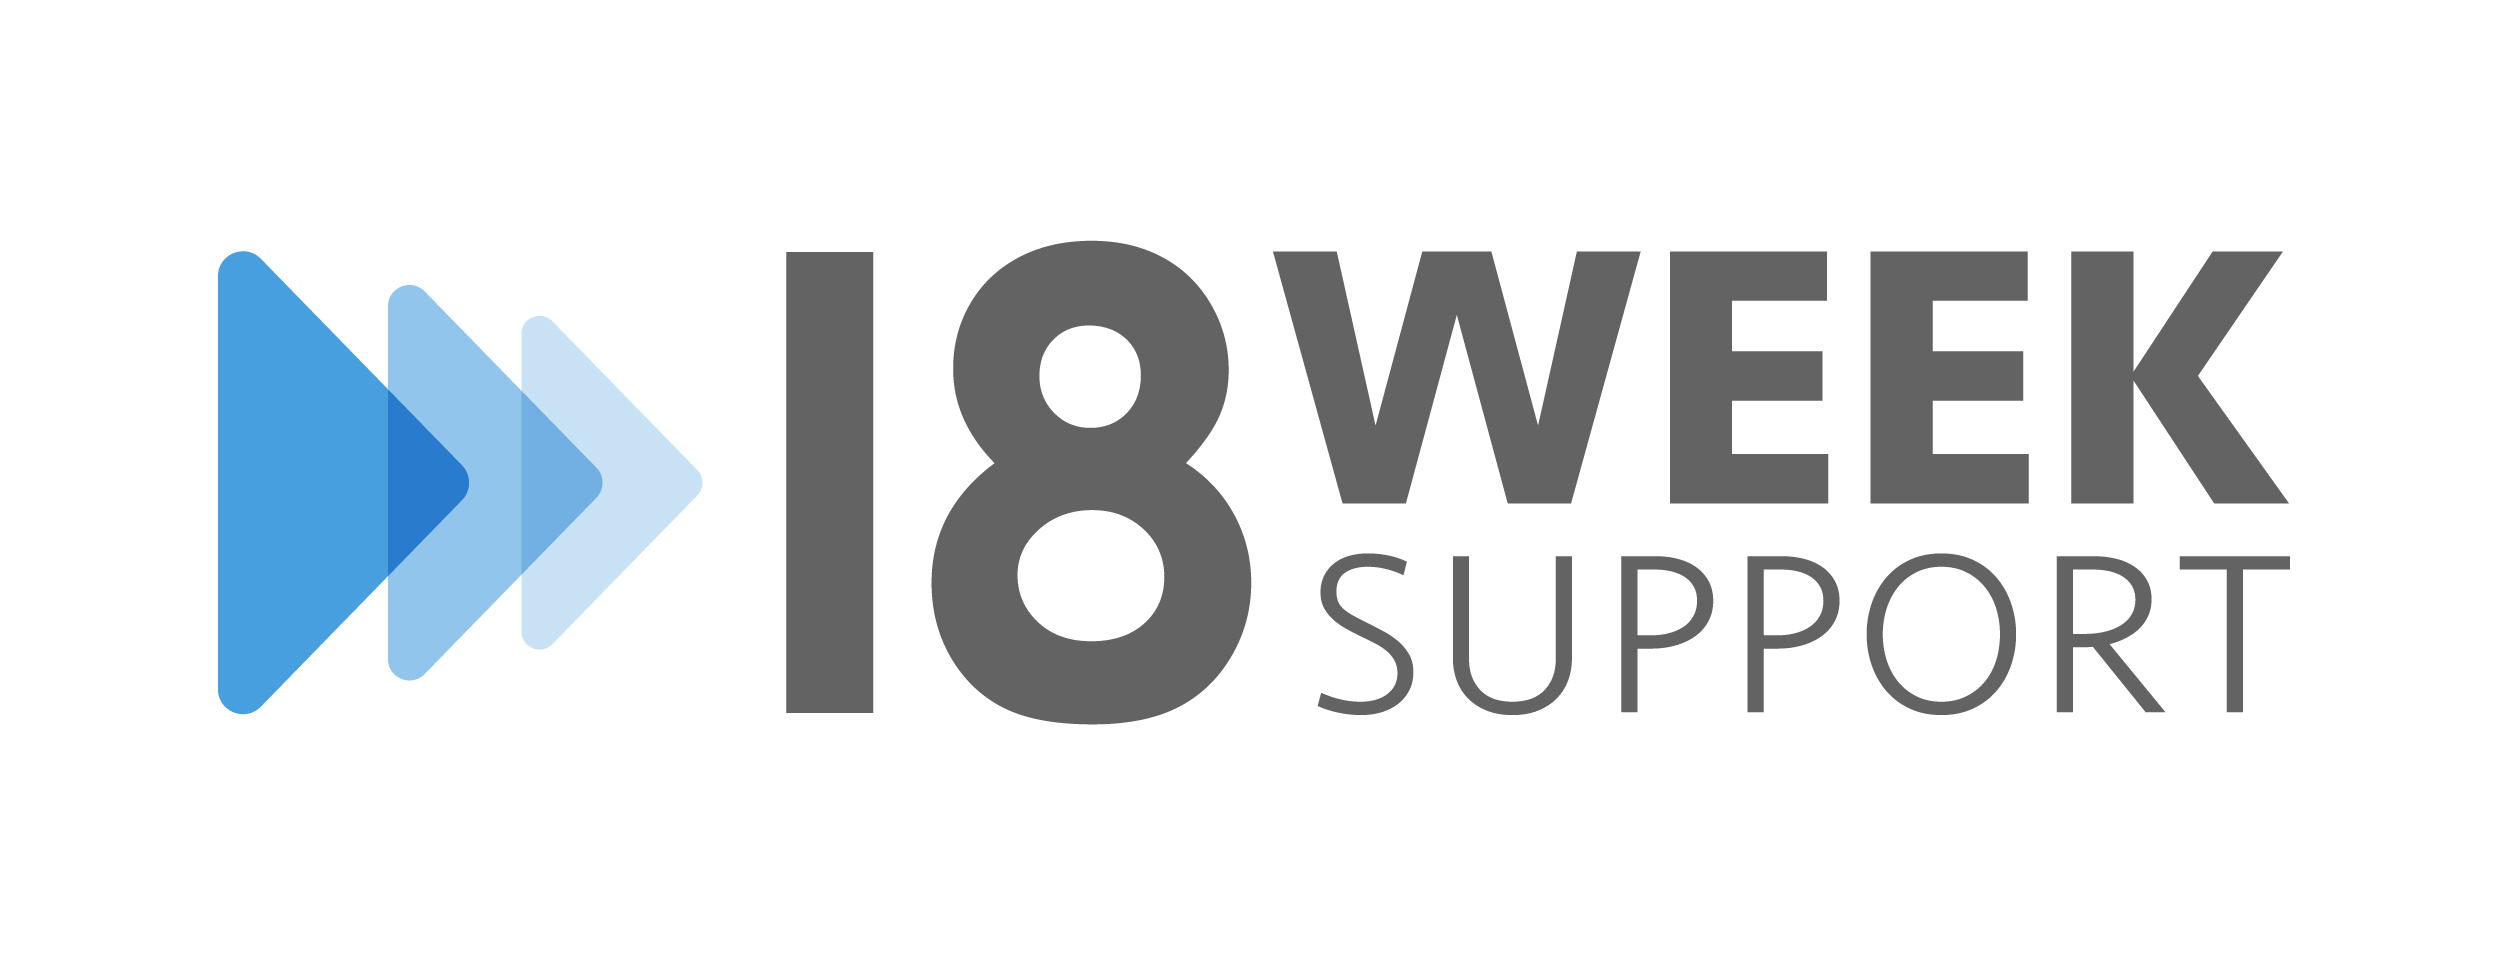 18 Week Support